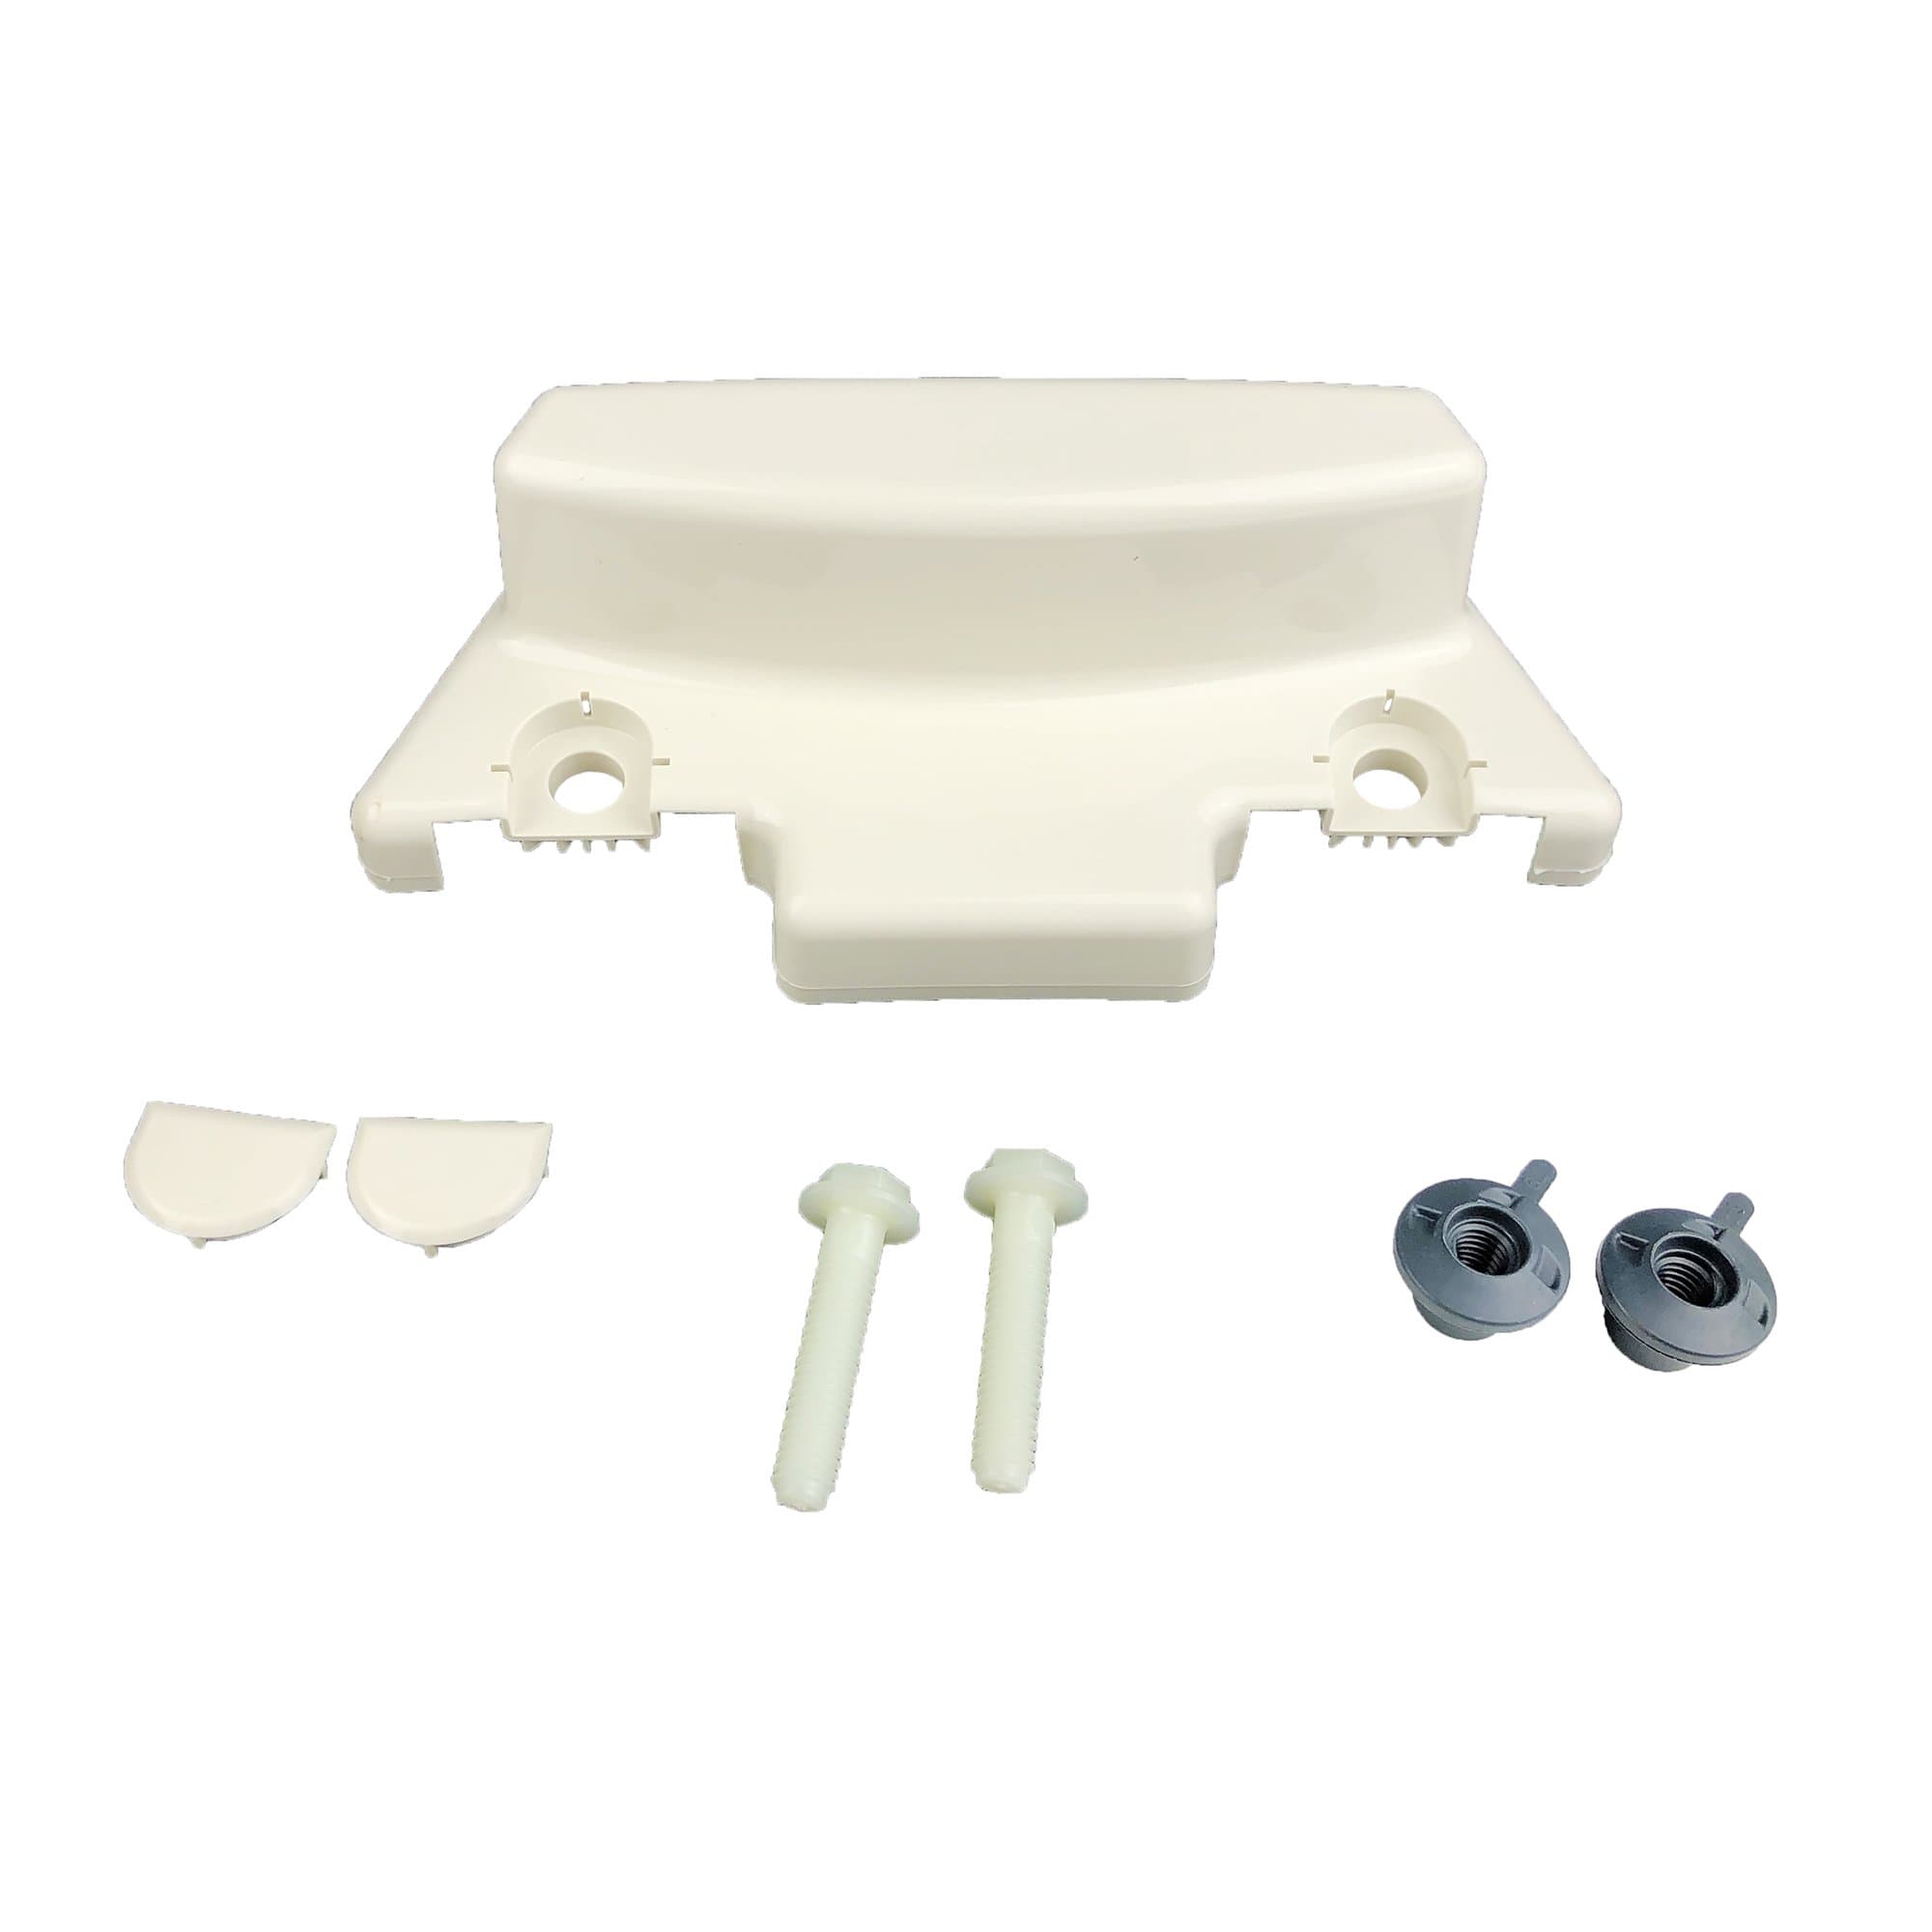 Dometic 385312111 310/311 Toilet Seat / Cover Kit - Bone